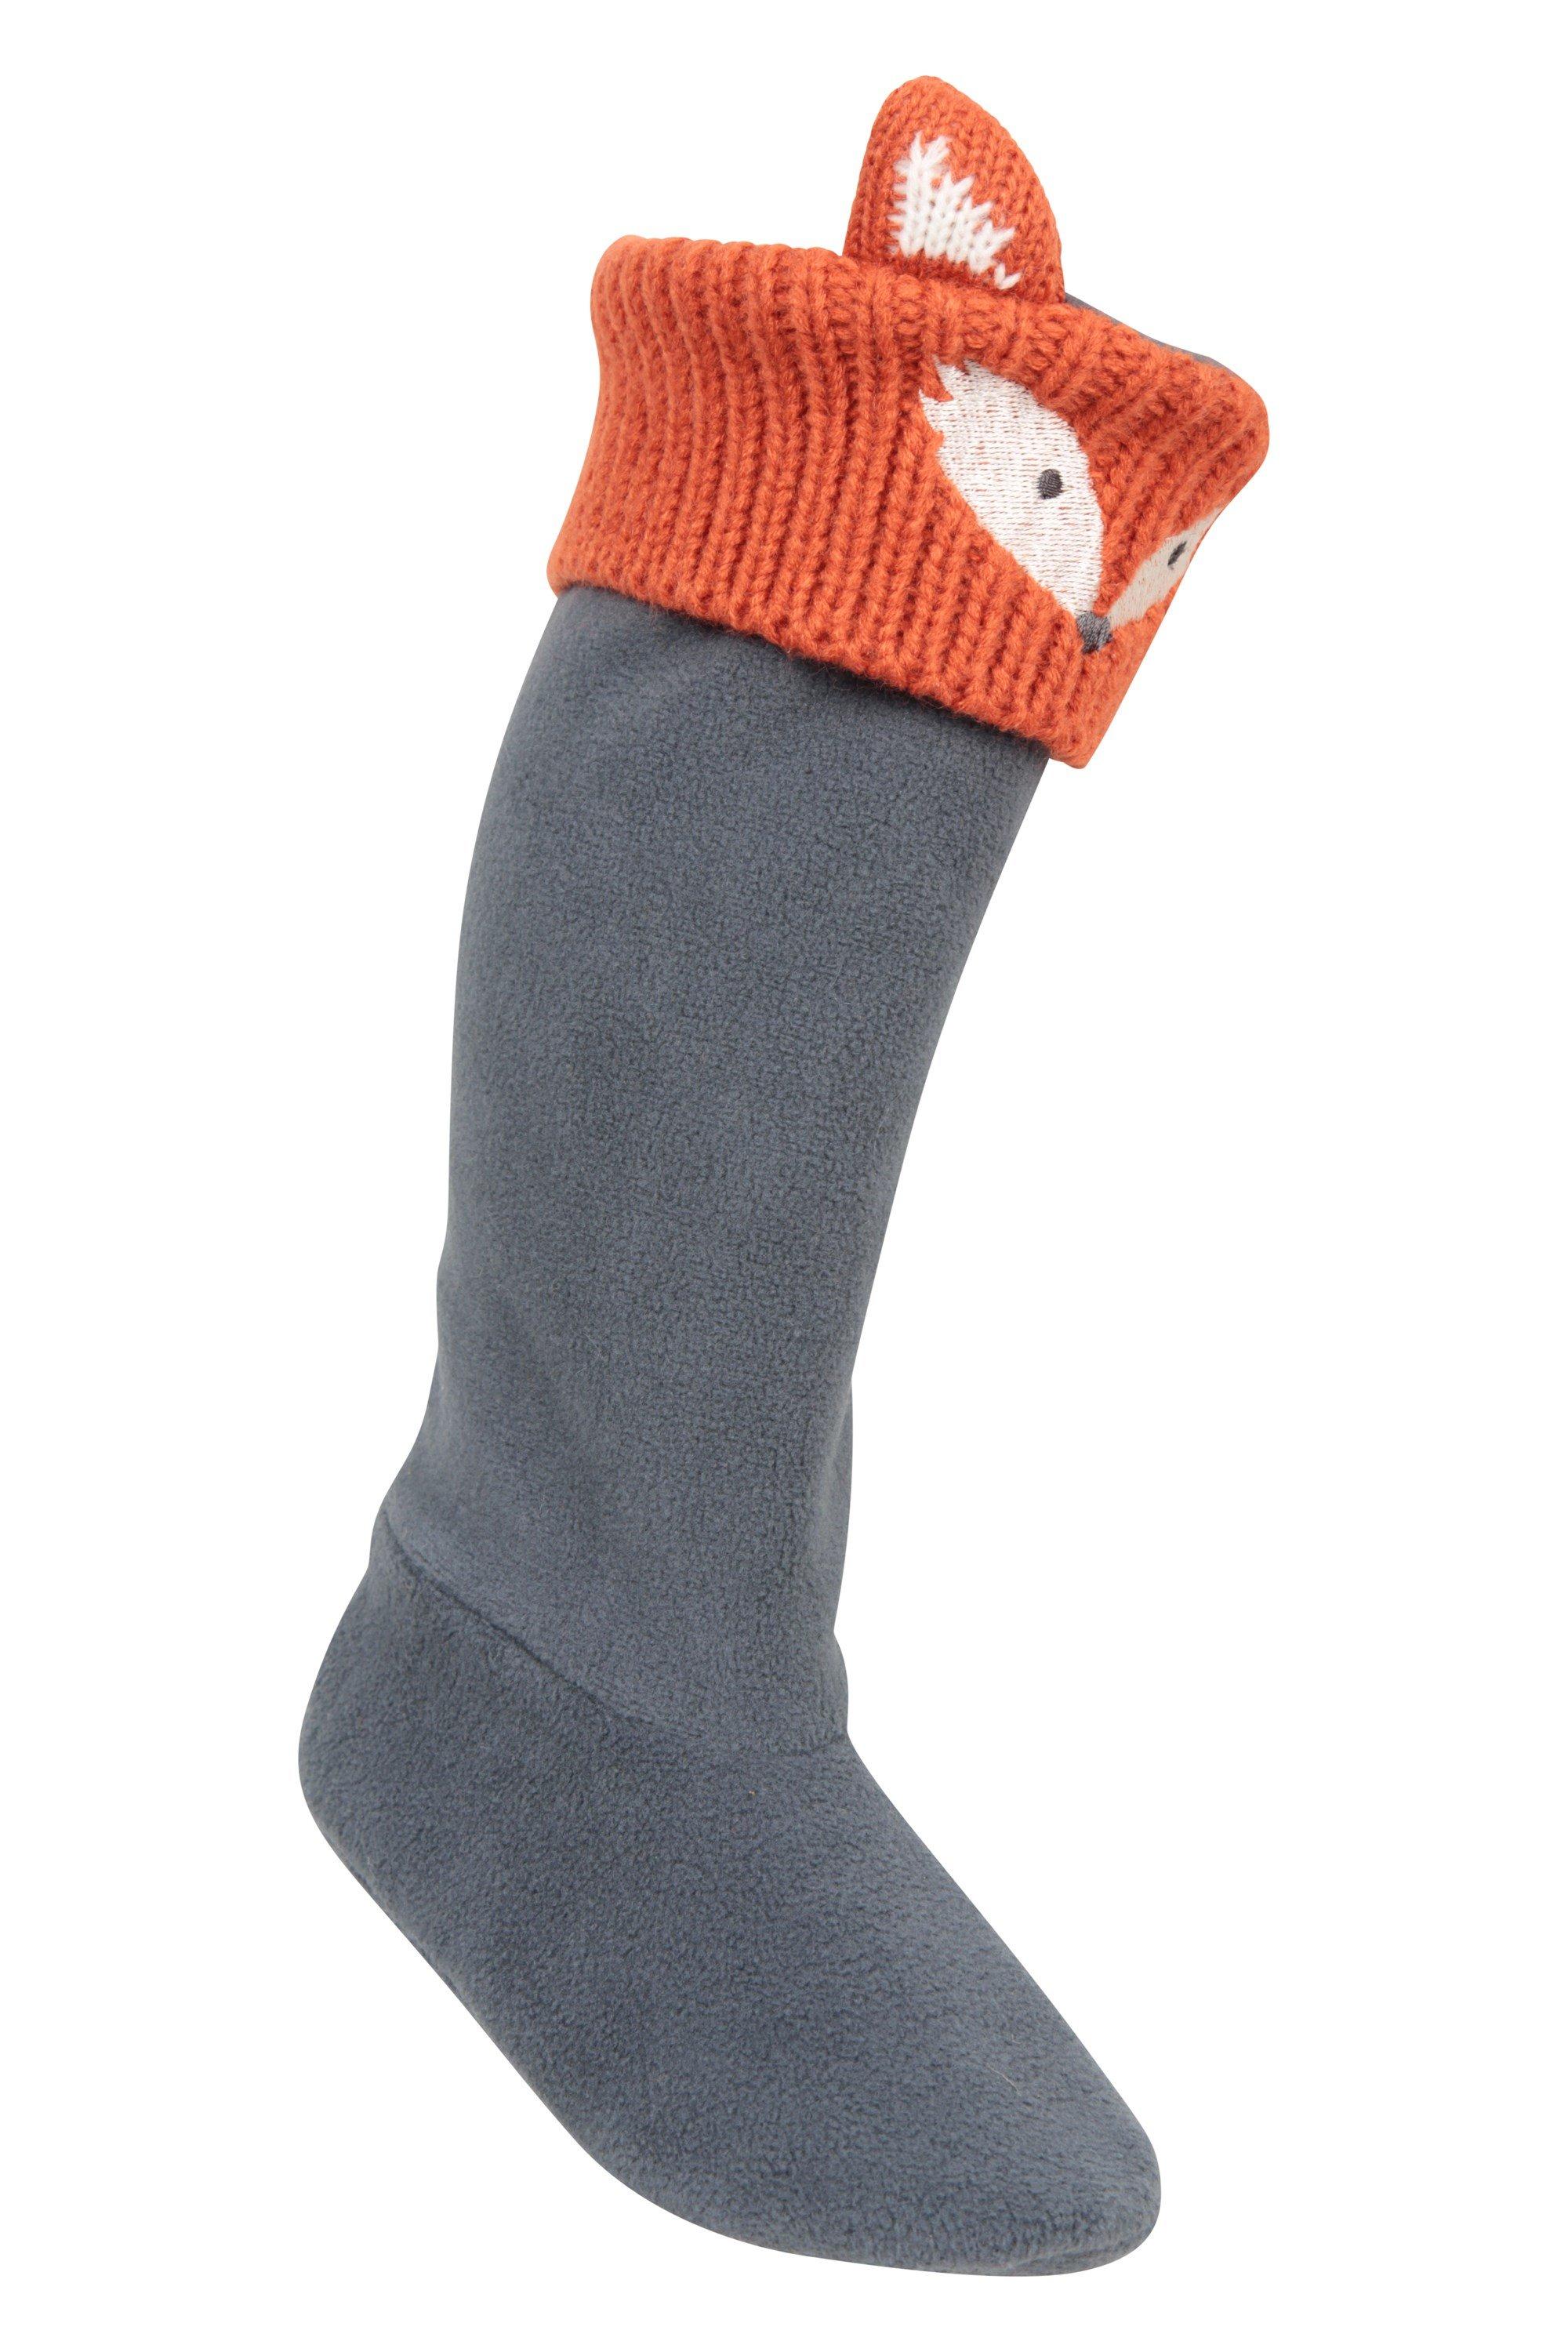 Animal  Welly Liners  Warm Soft Fleece Fabric Thermal Boot Socks